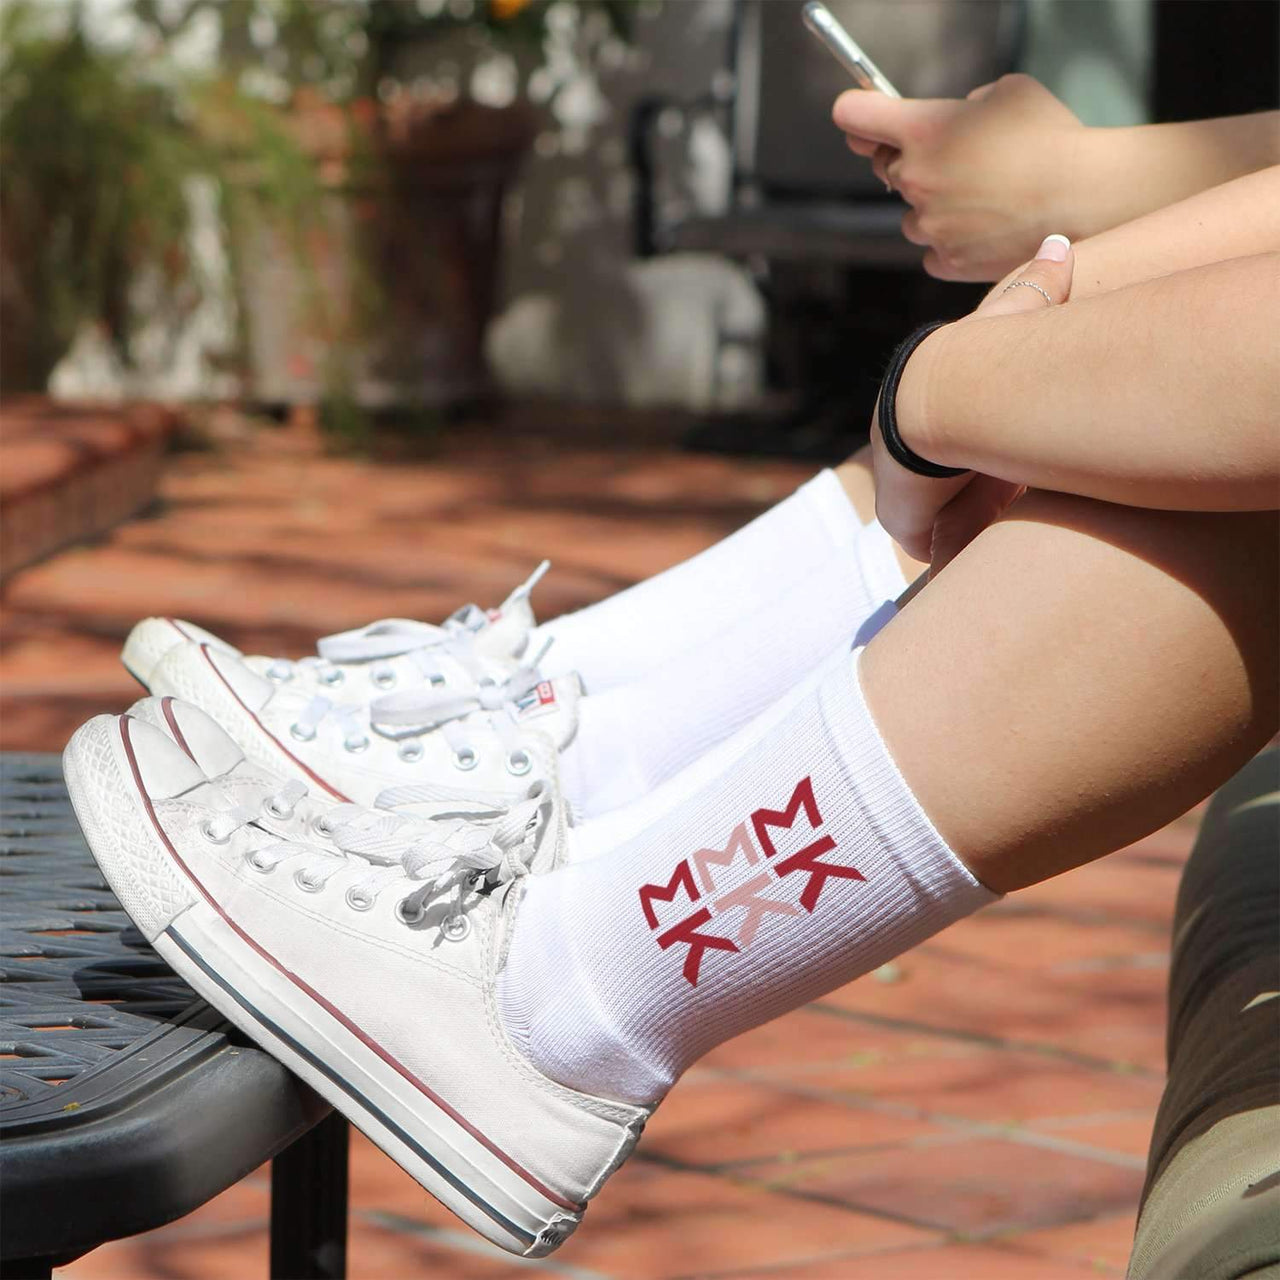 Sigma Kappa sorority letters custom printed on white cotton crew socks